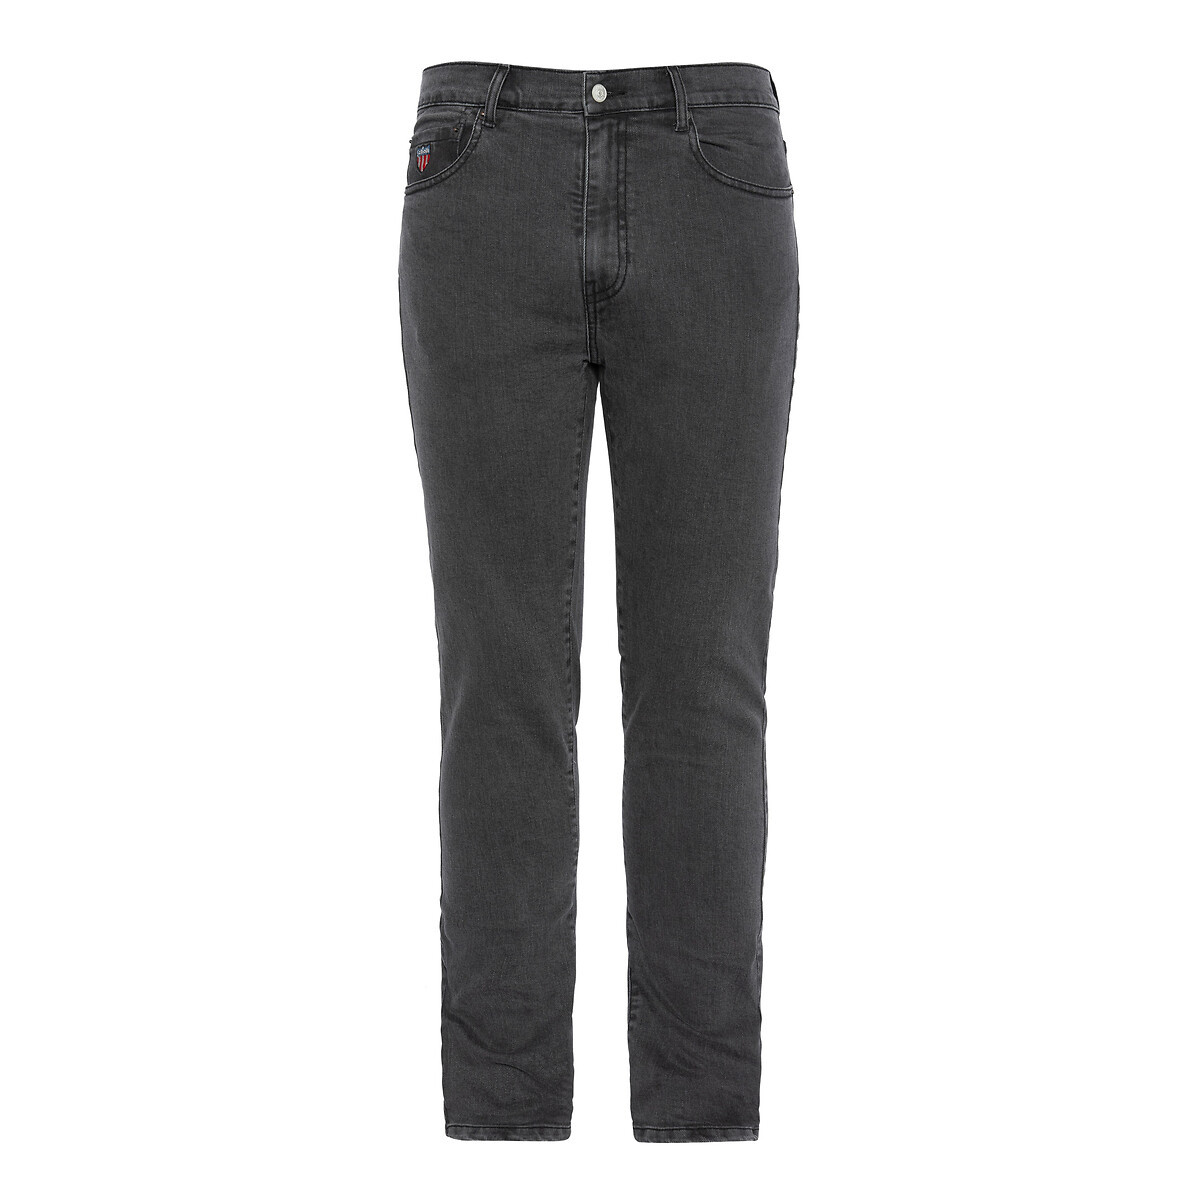 Джинсы узкие 36/34 серый джинсы mustang размер 36 34 серый